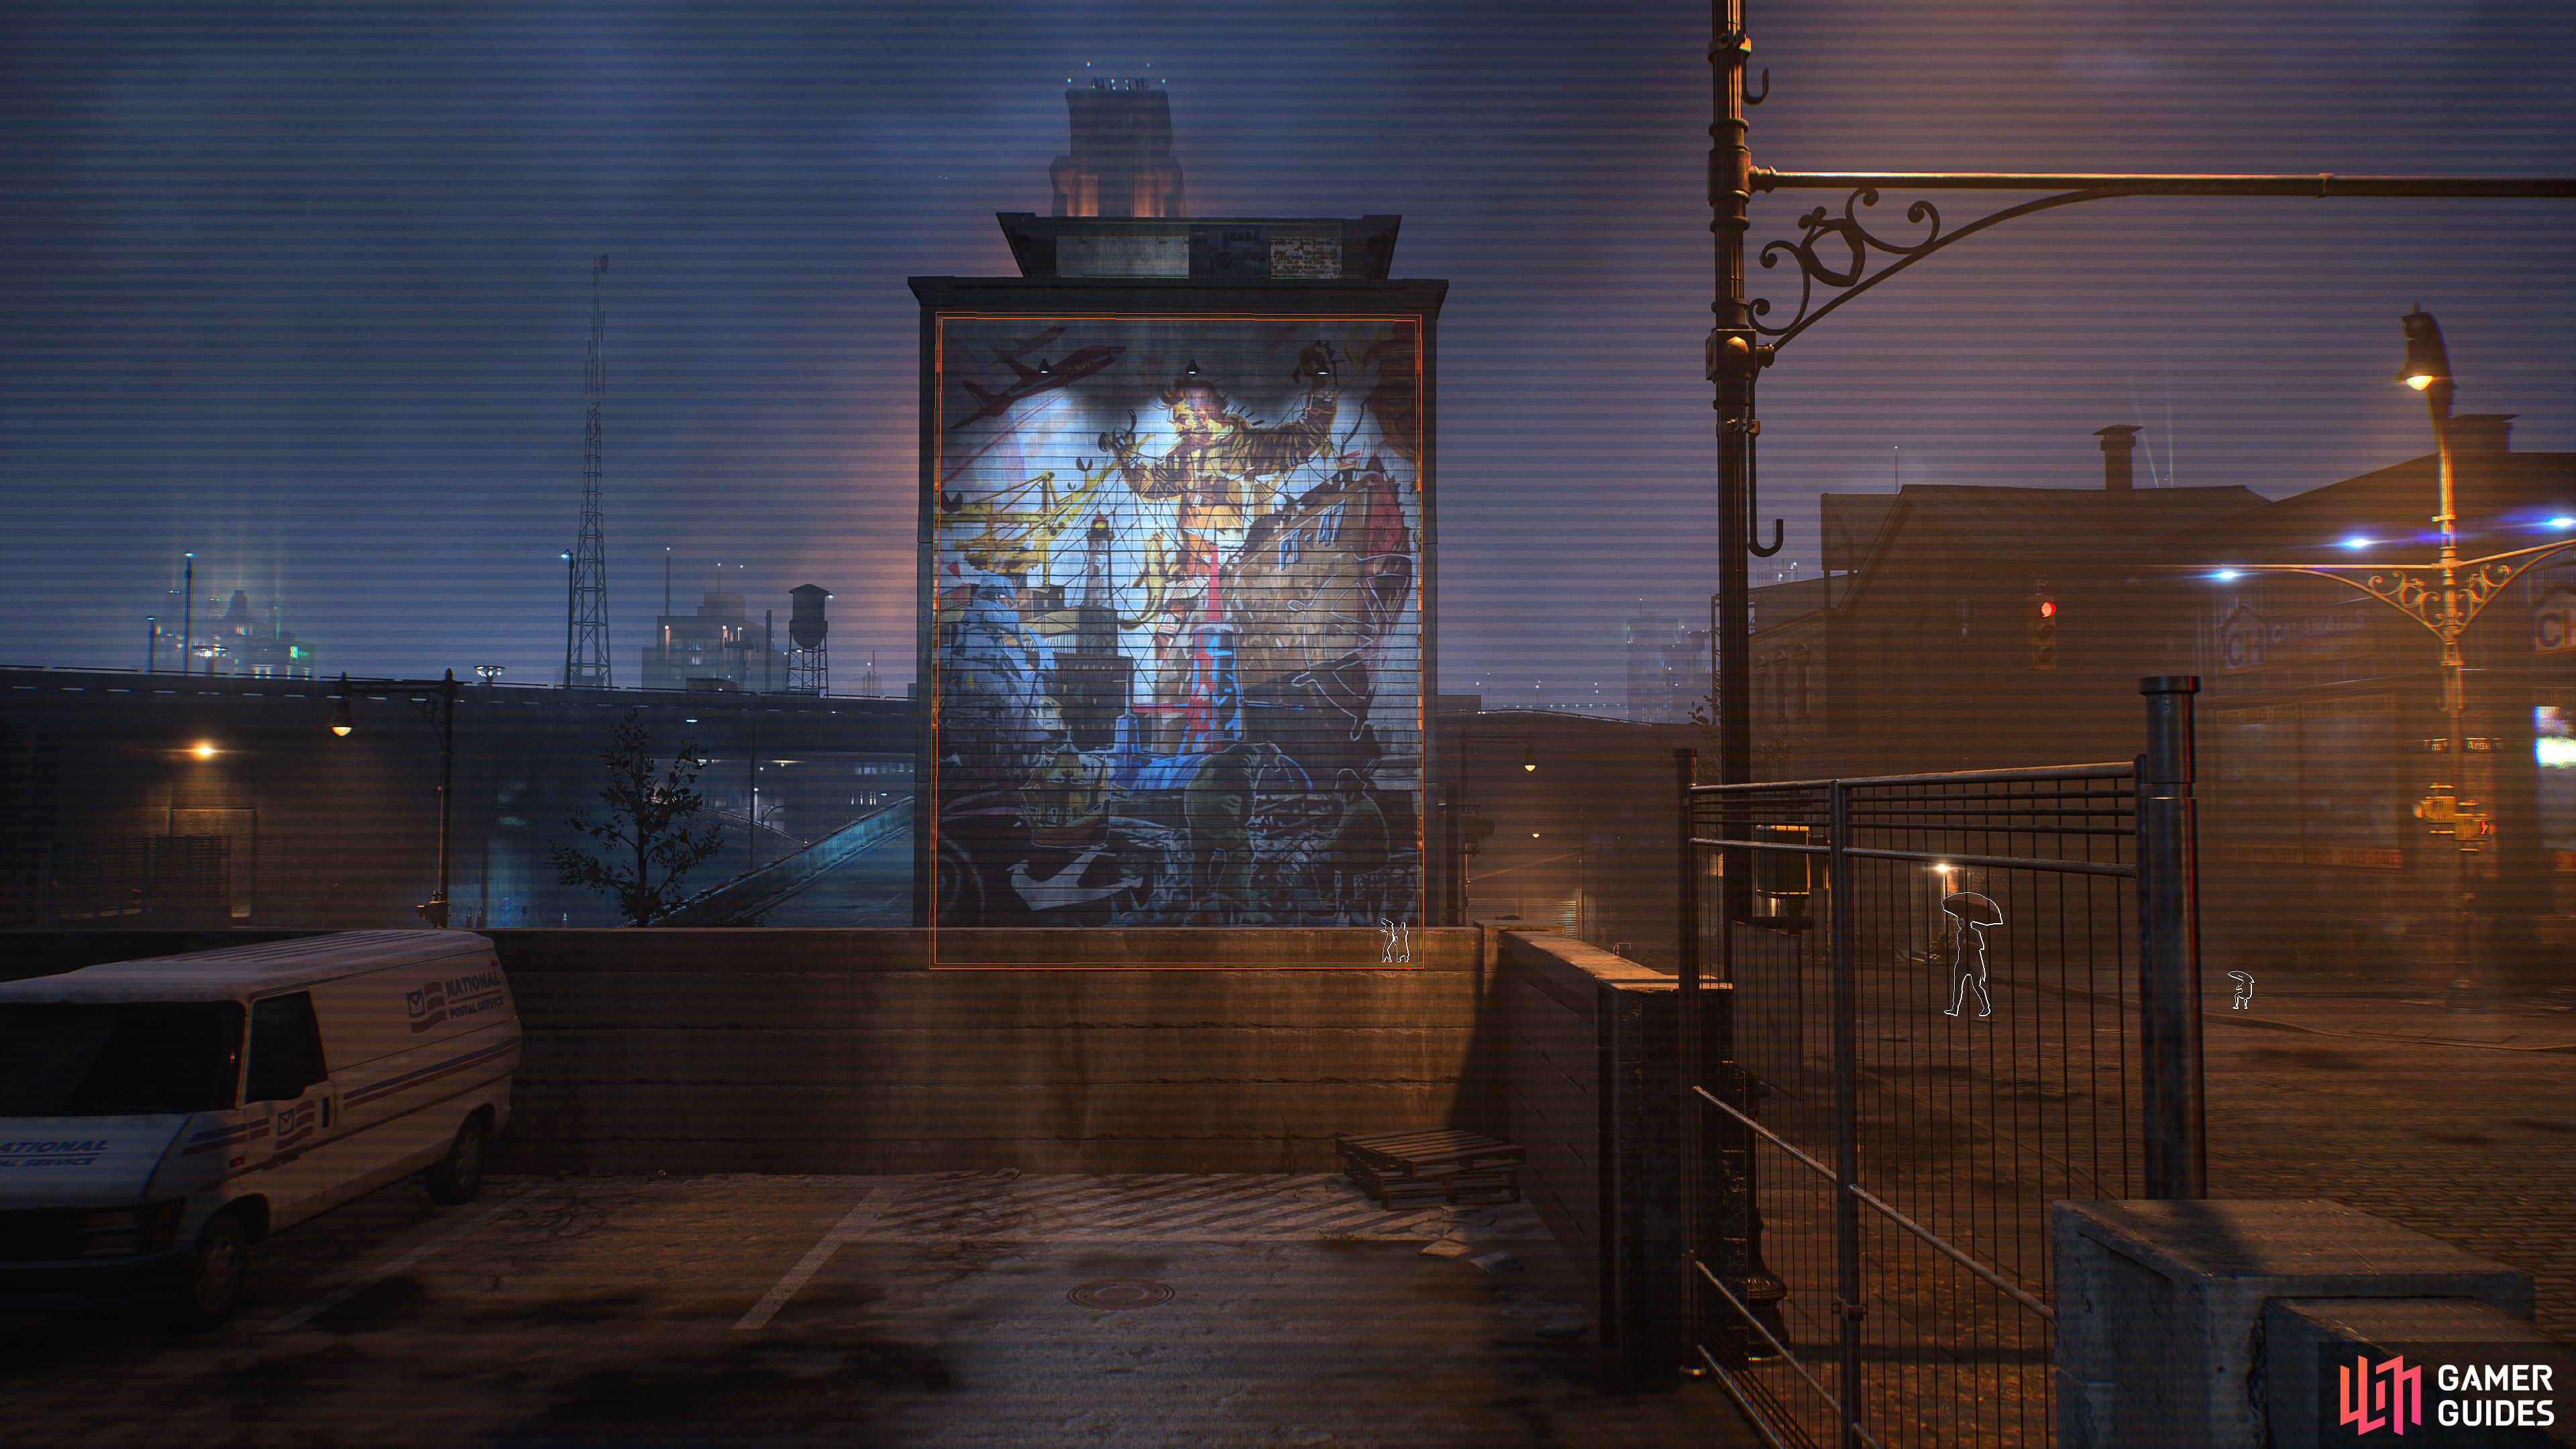 "Gotham Piers" Street Art is painted by artist The Catburglar.